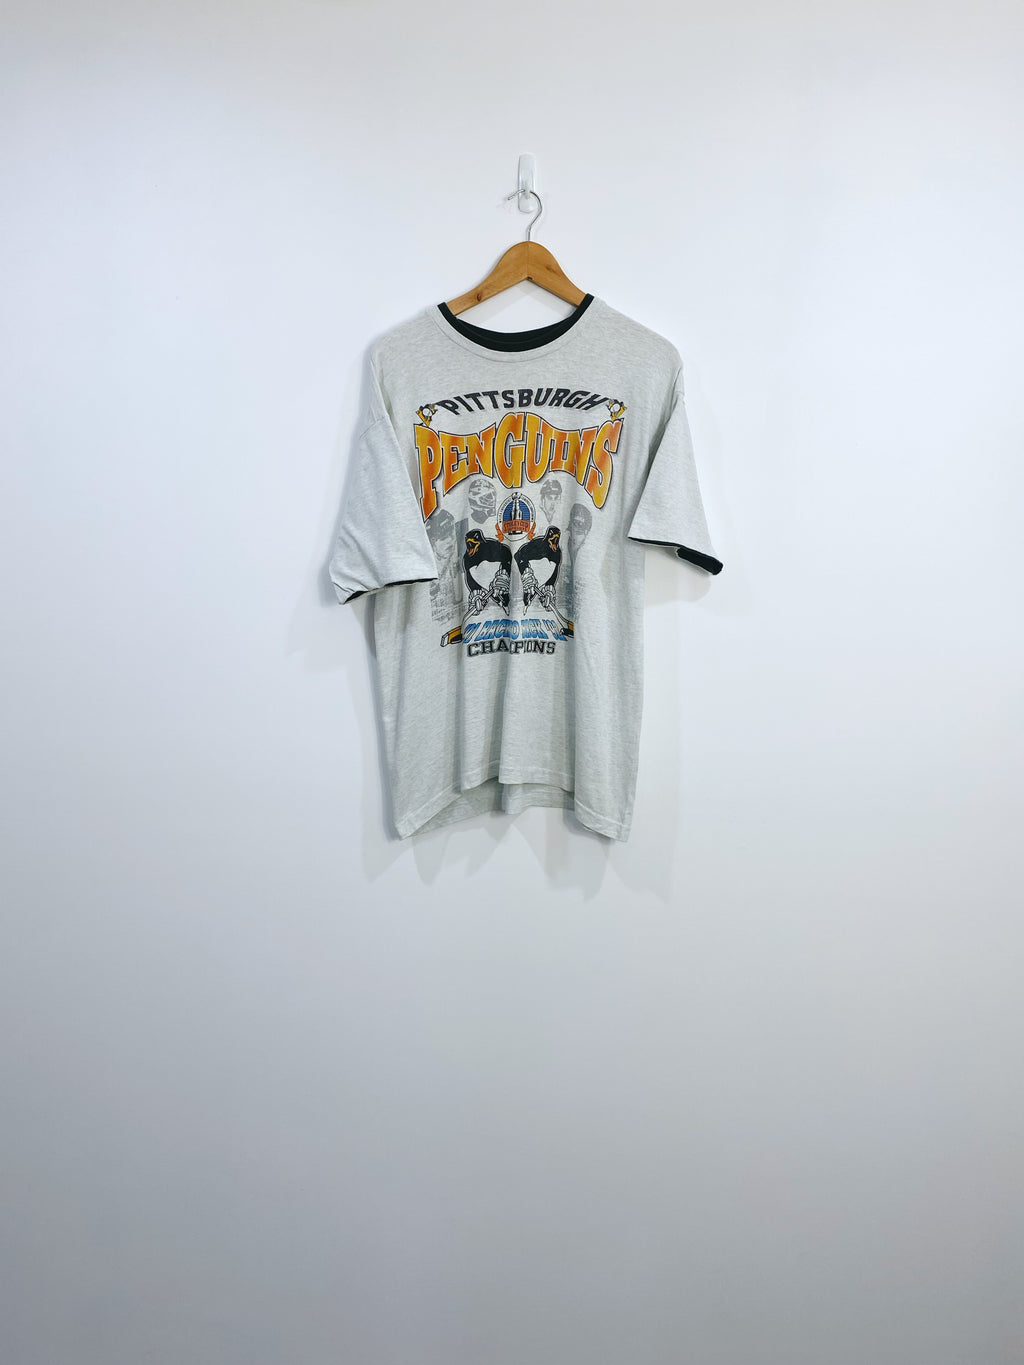 Vintage 1992 Pittsburgh Penguins Championship T-shirt M